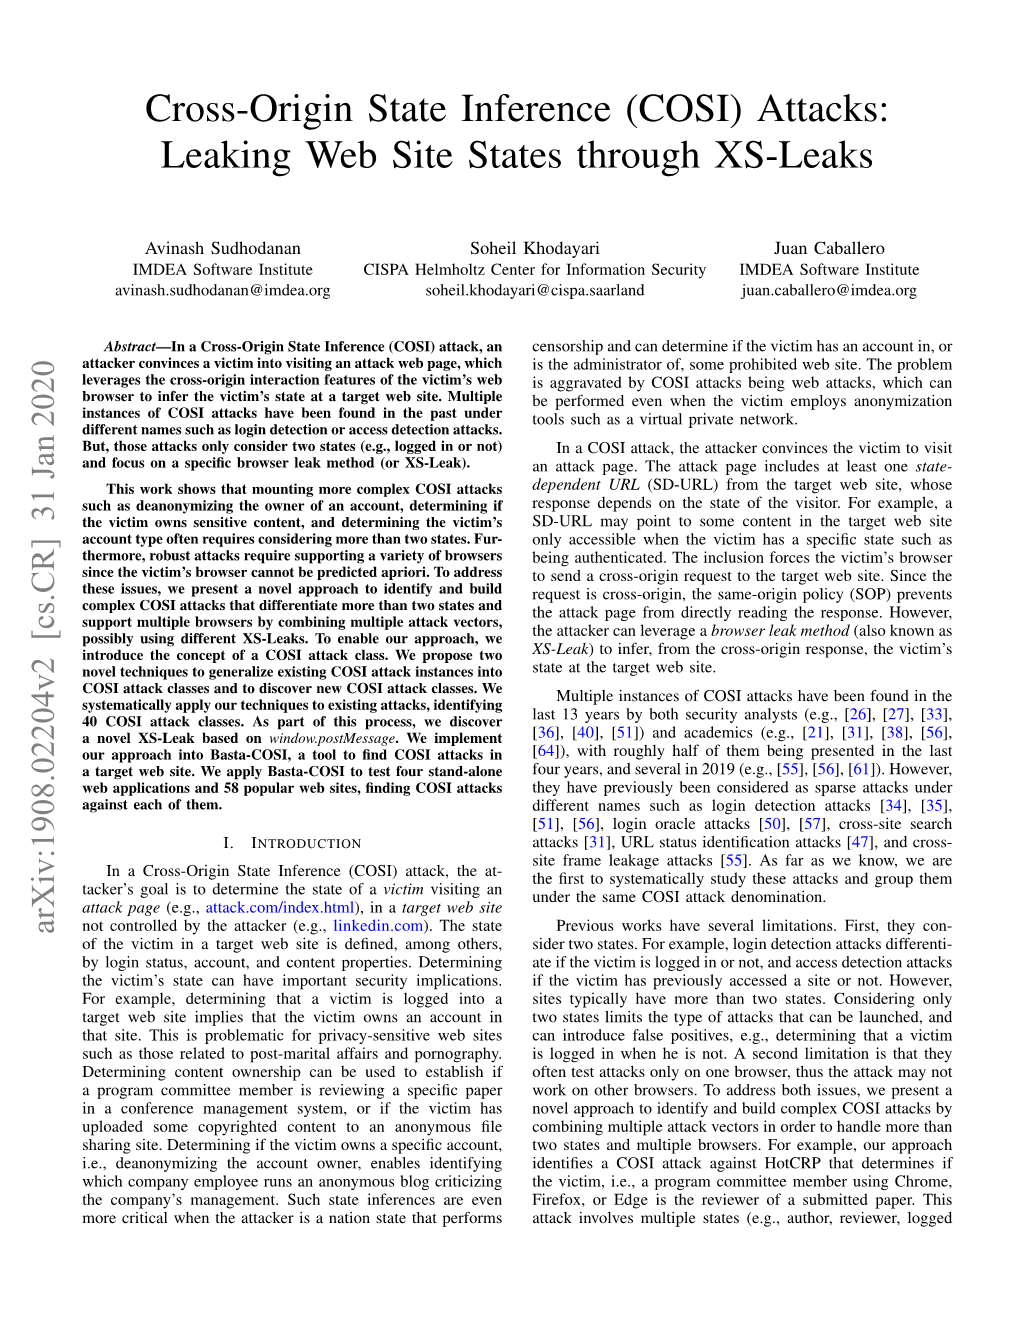 (COSI) Attacks: Leaking Web Site States Through XS-Leaks